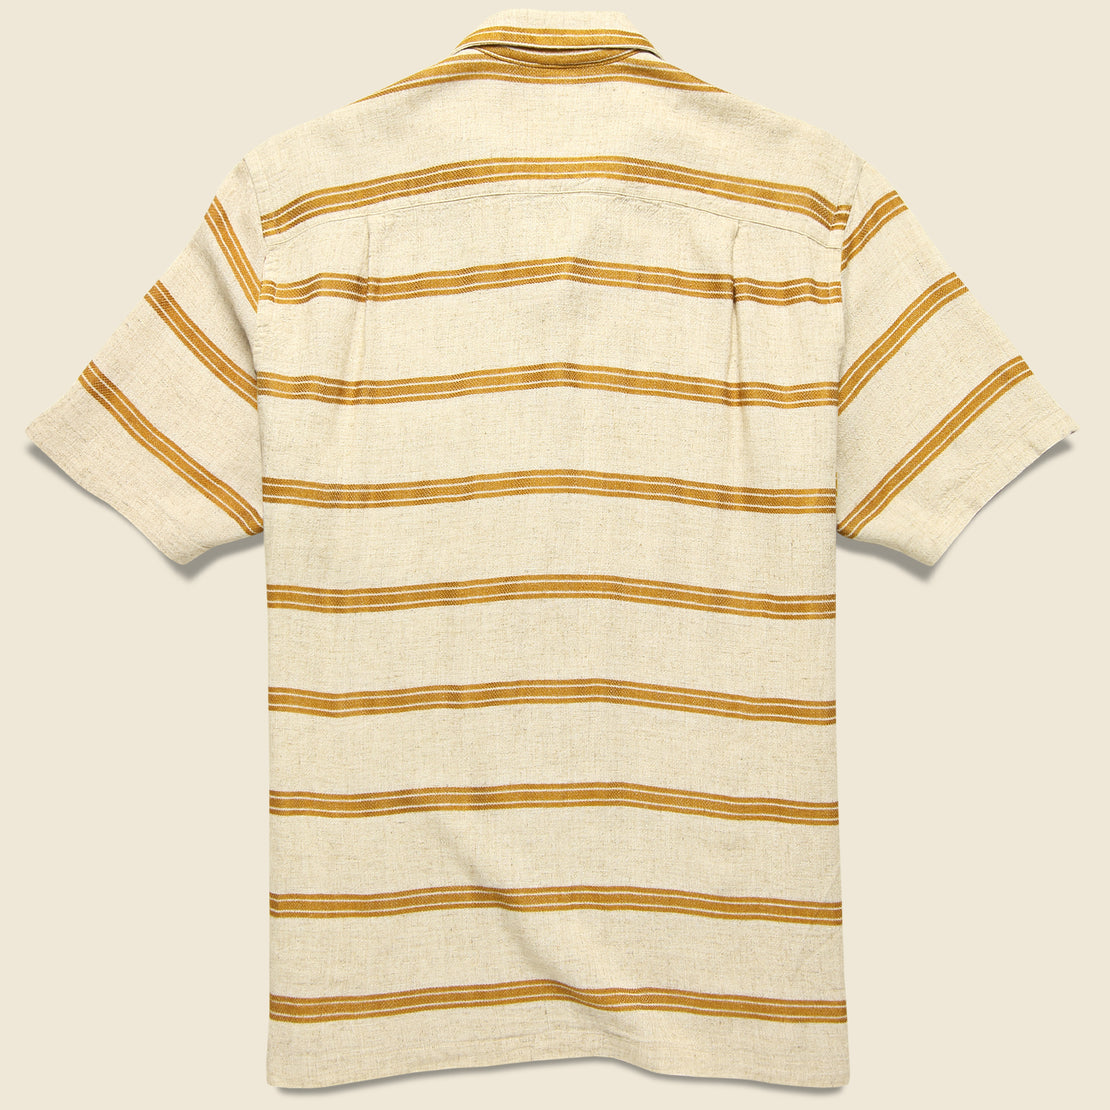 San Francisco Shirt - Gold Stripe - Portuguese Flannel - STAG Provisions - Tops - S/S Woven - Stripe